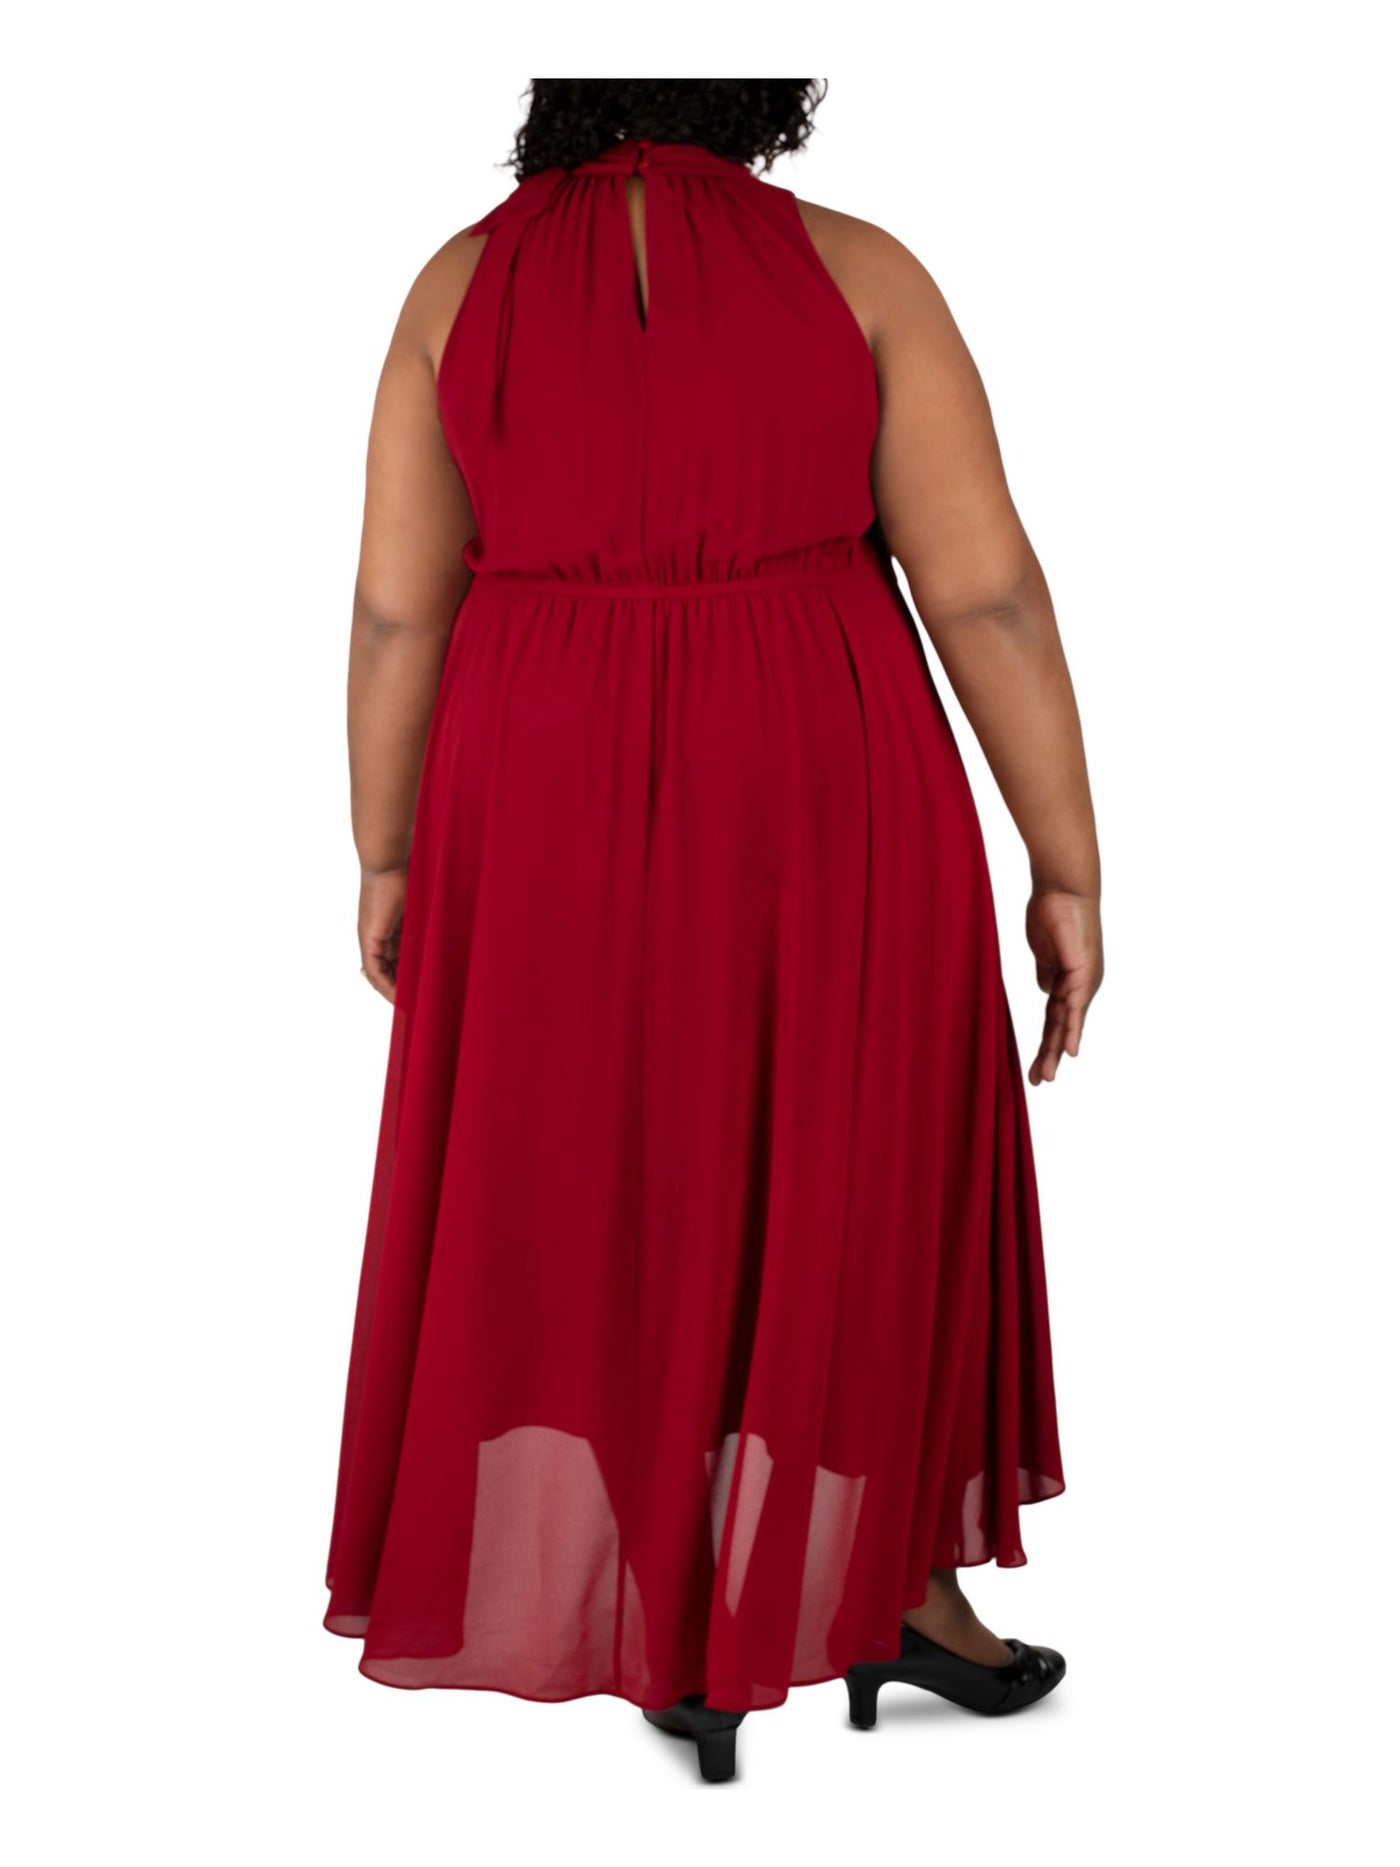 ROBBIE BEE Womens Red Turtle Neck Tea-Length Evening Sheath Dress Plus 14W